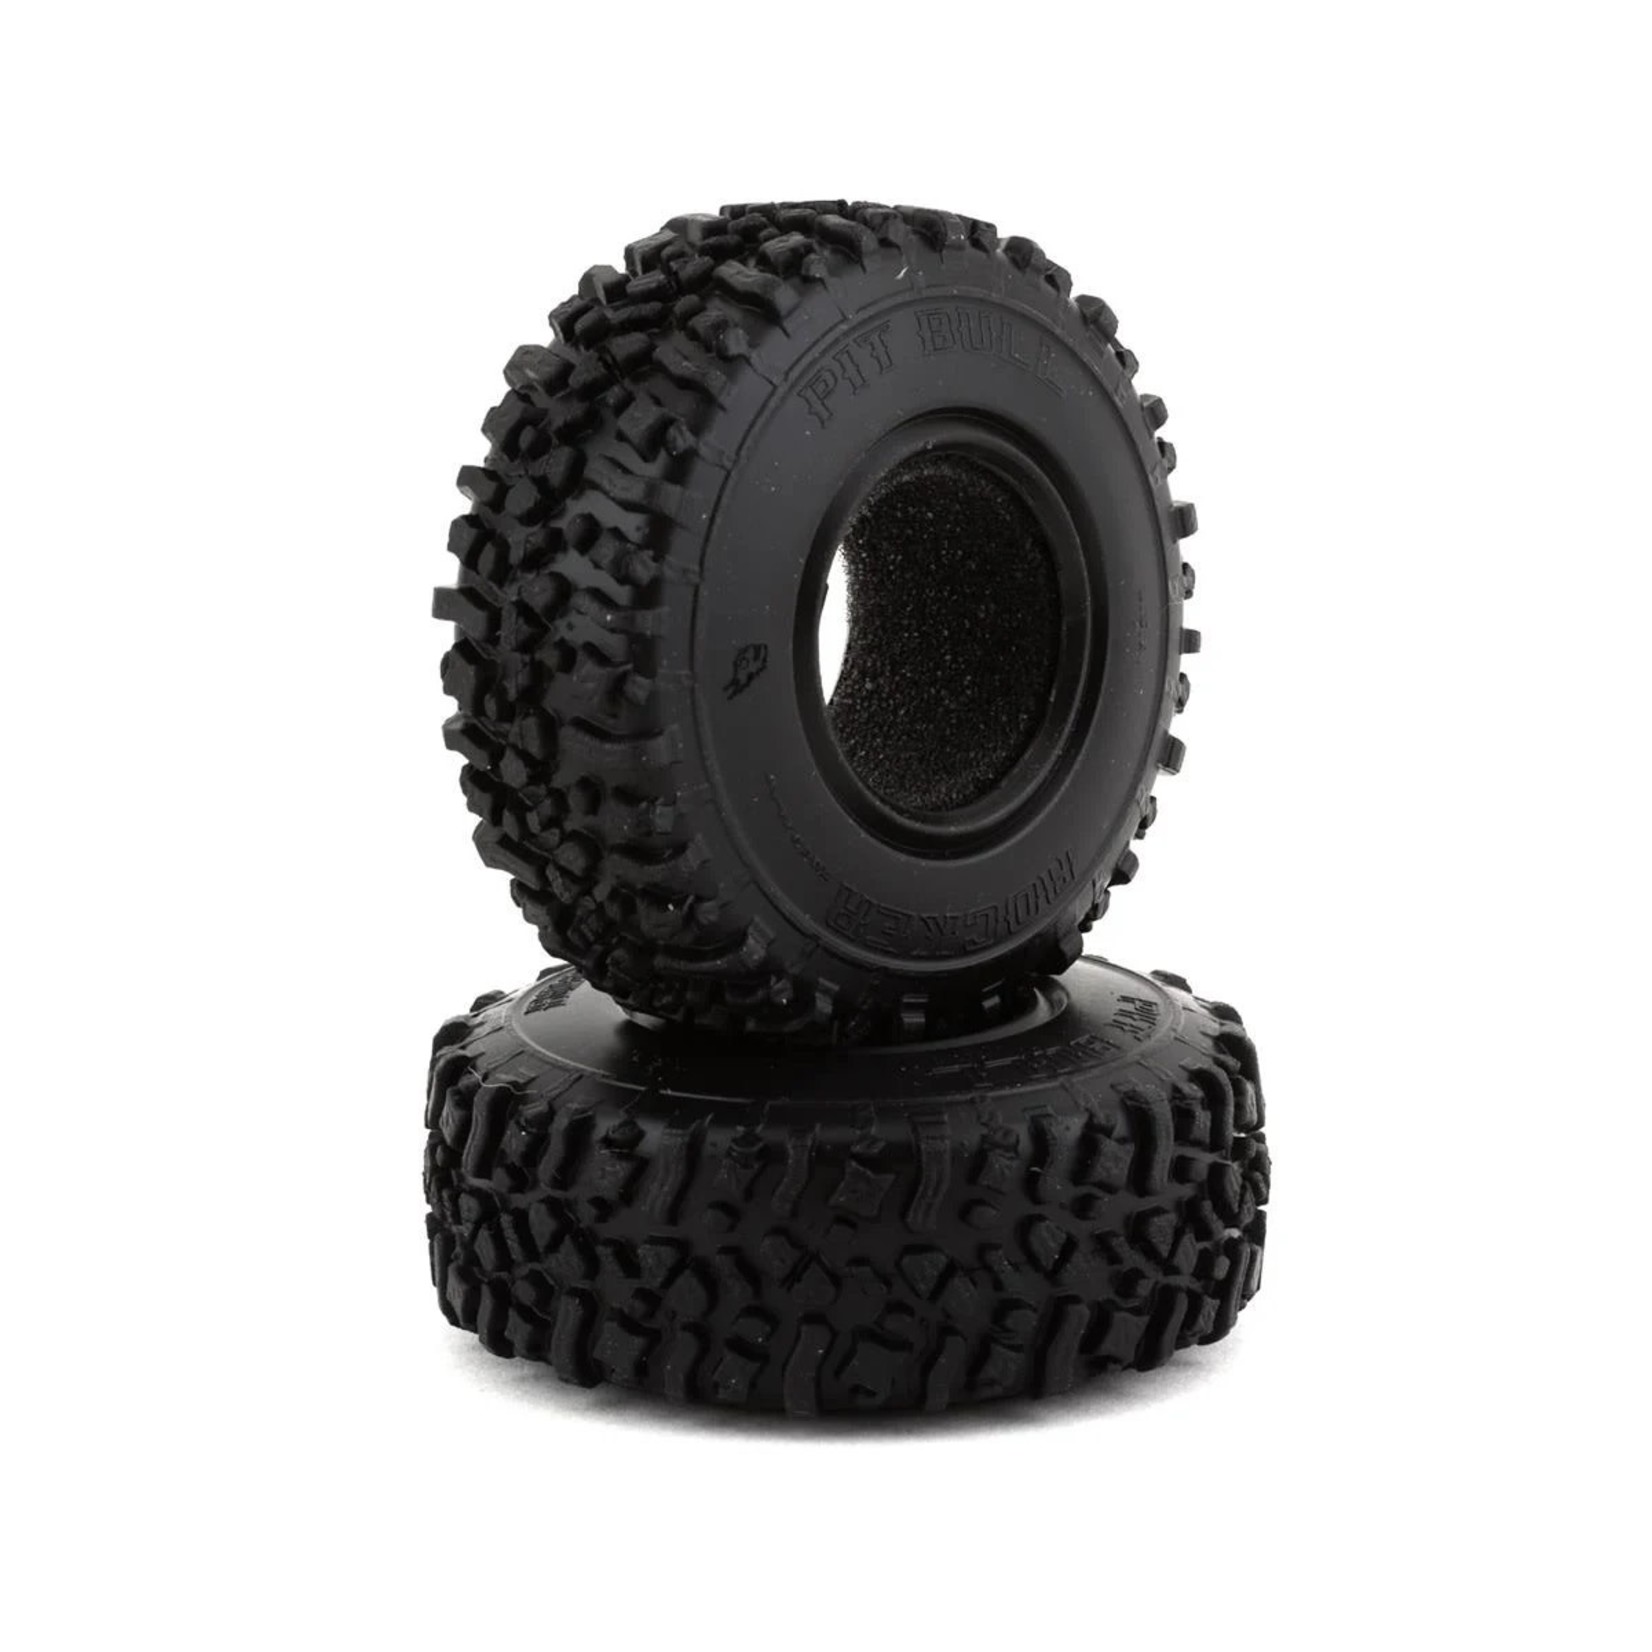 Pit Bull Pit Bull Tires Rocker 1.0" Micro Crawler Tires w/Foam (2) (Alien) #PBTPBR1AK